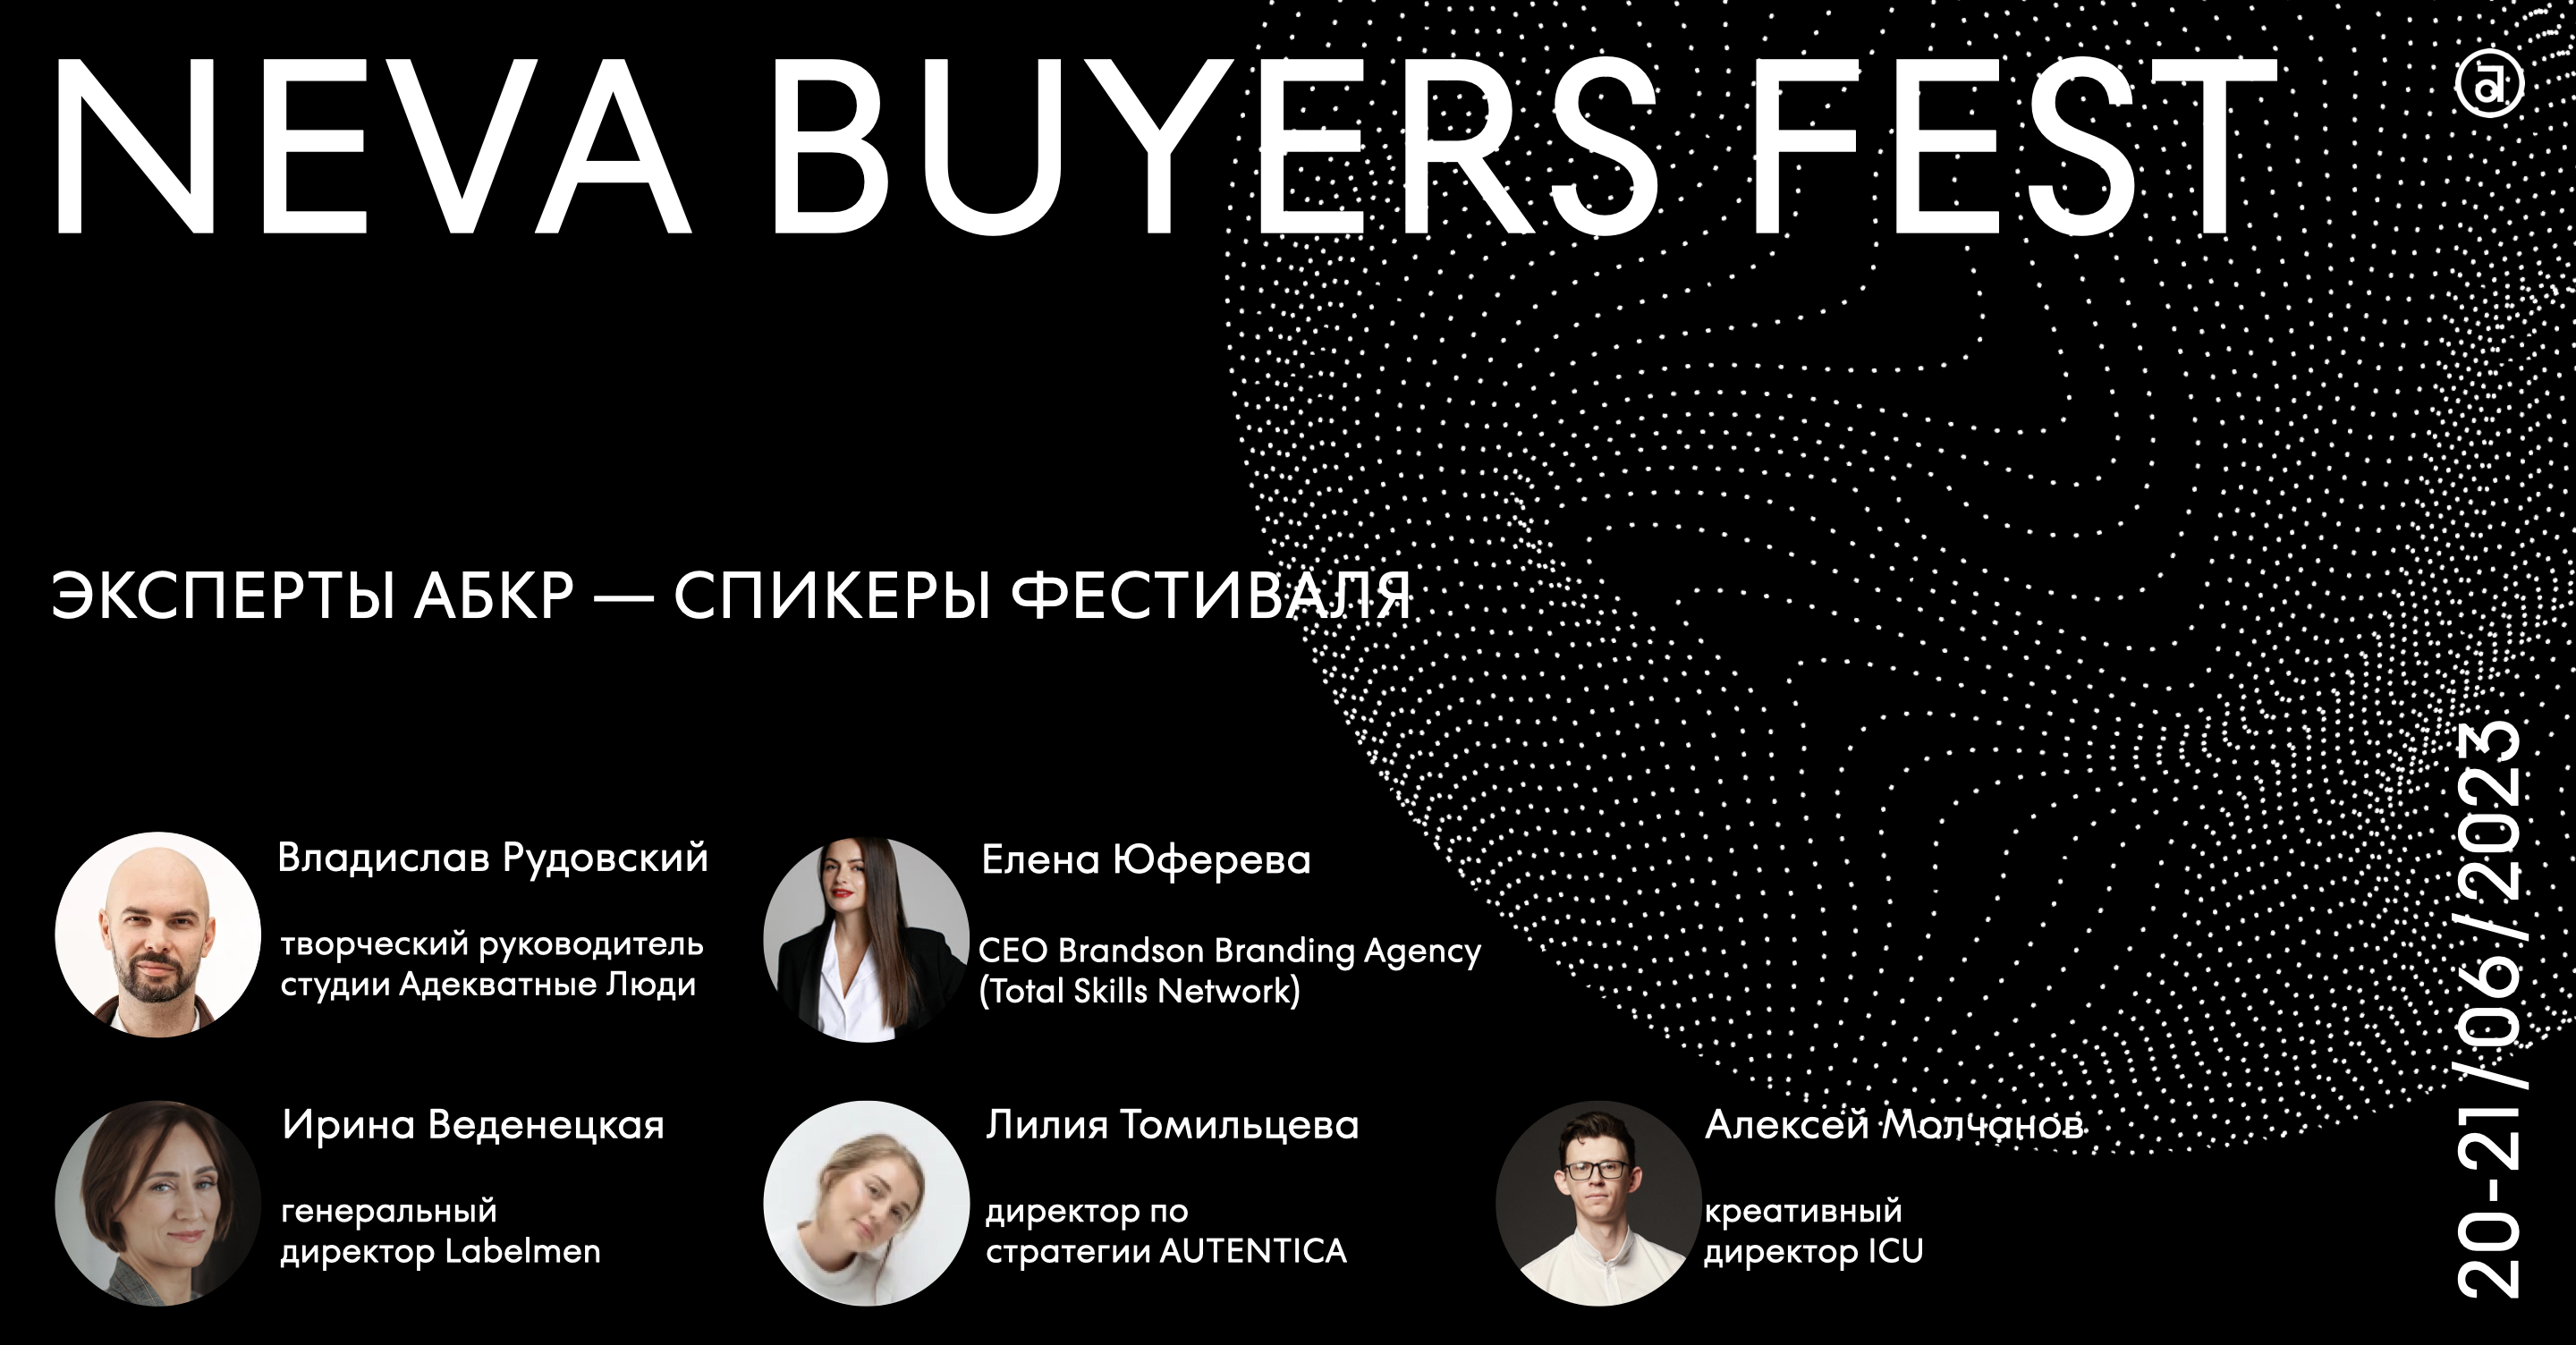 -     Neva Buyers Fest